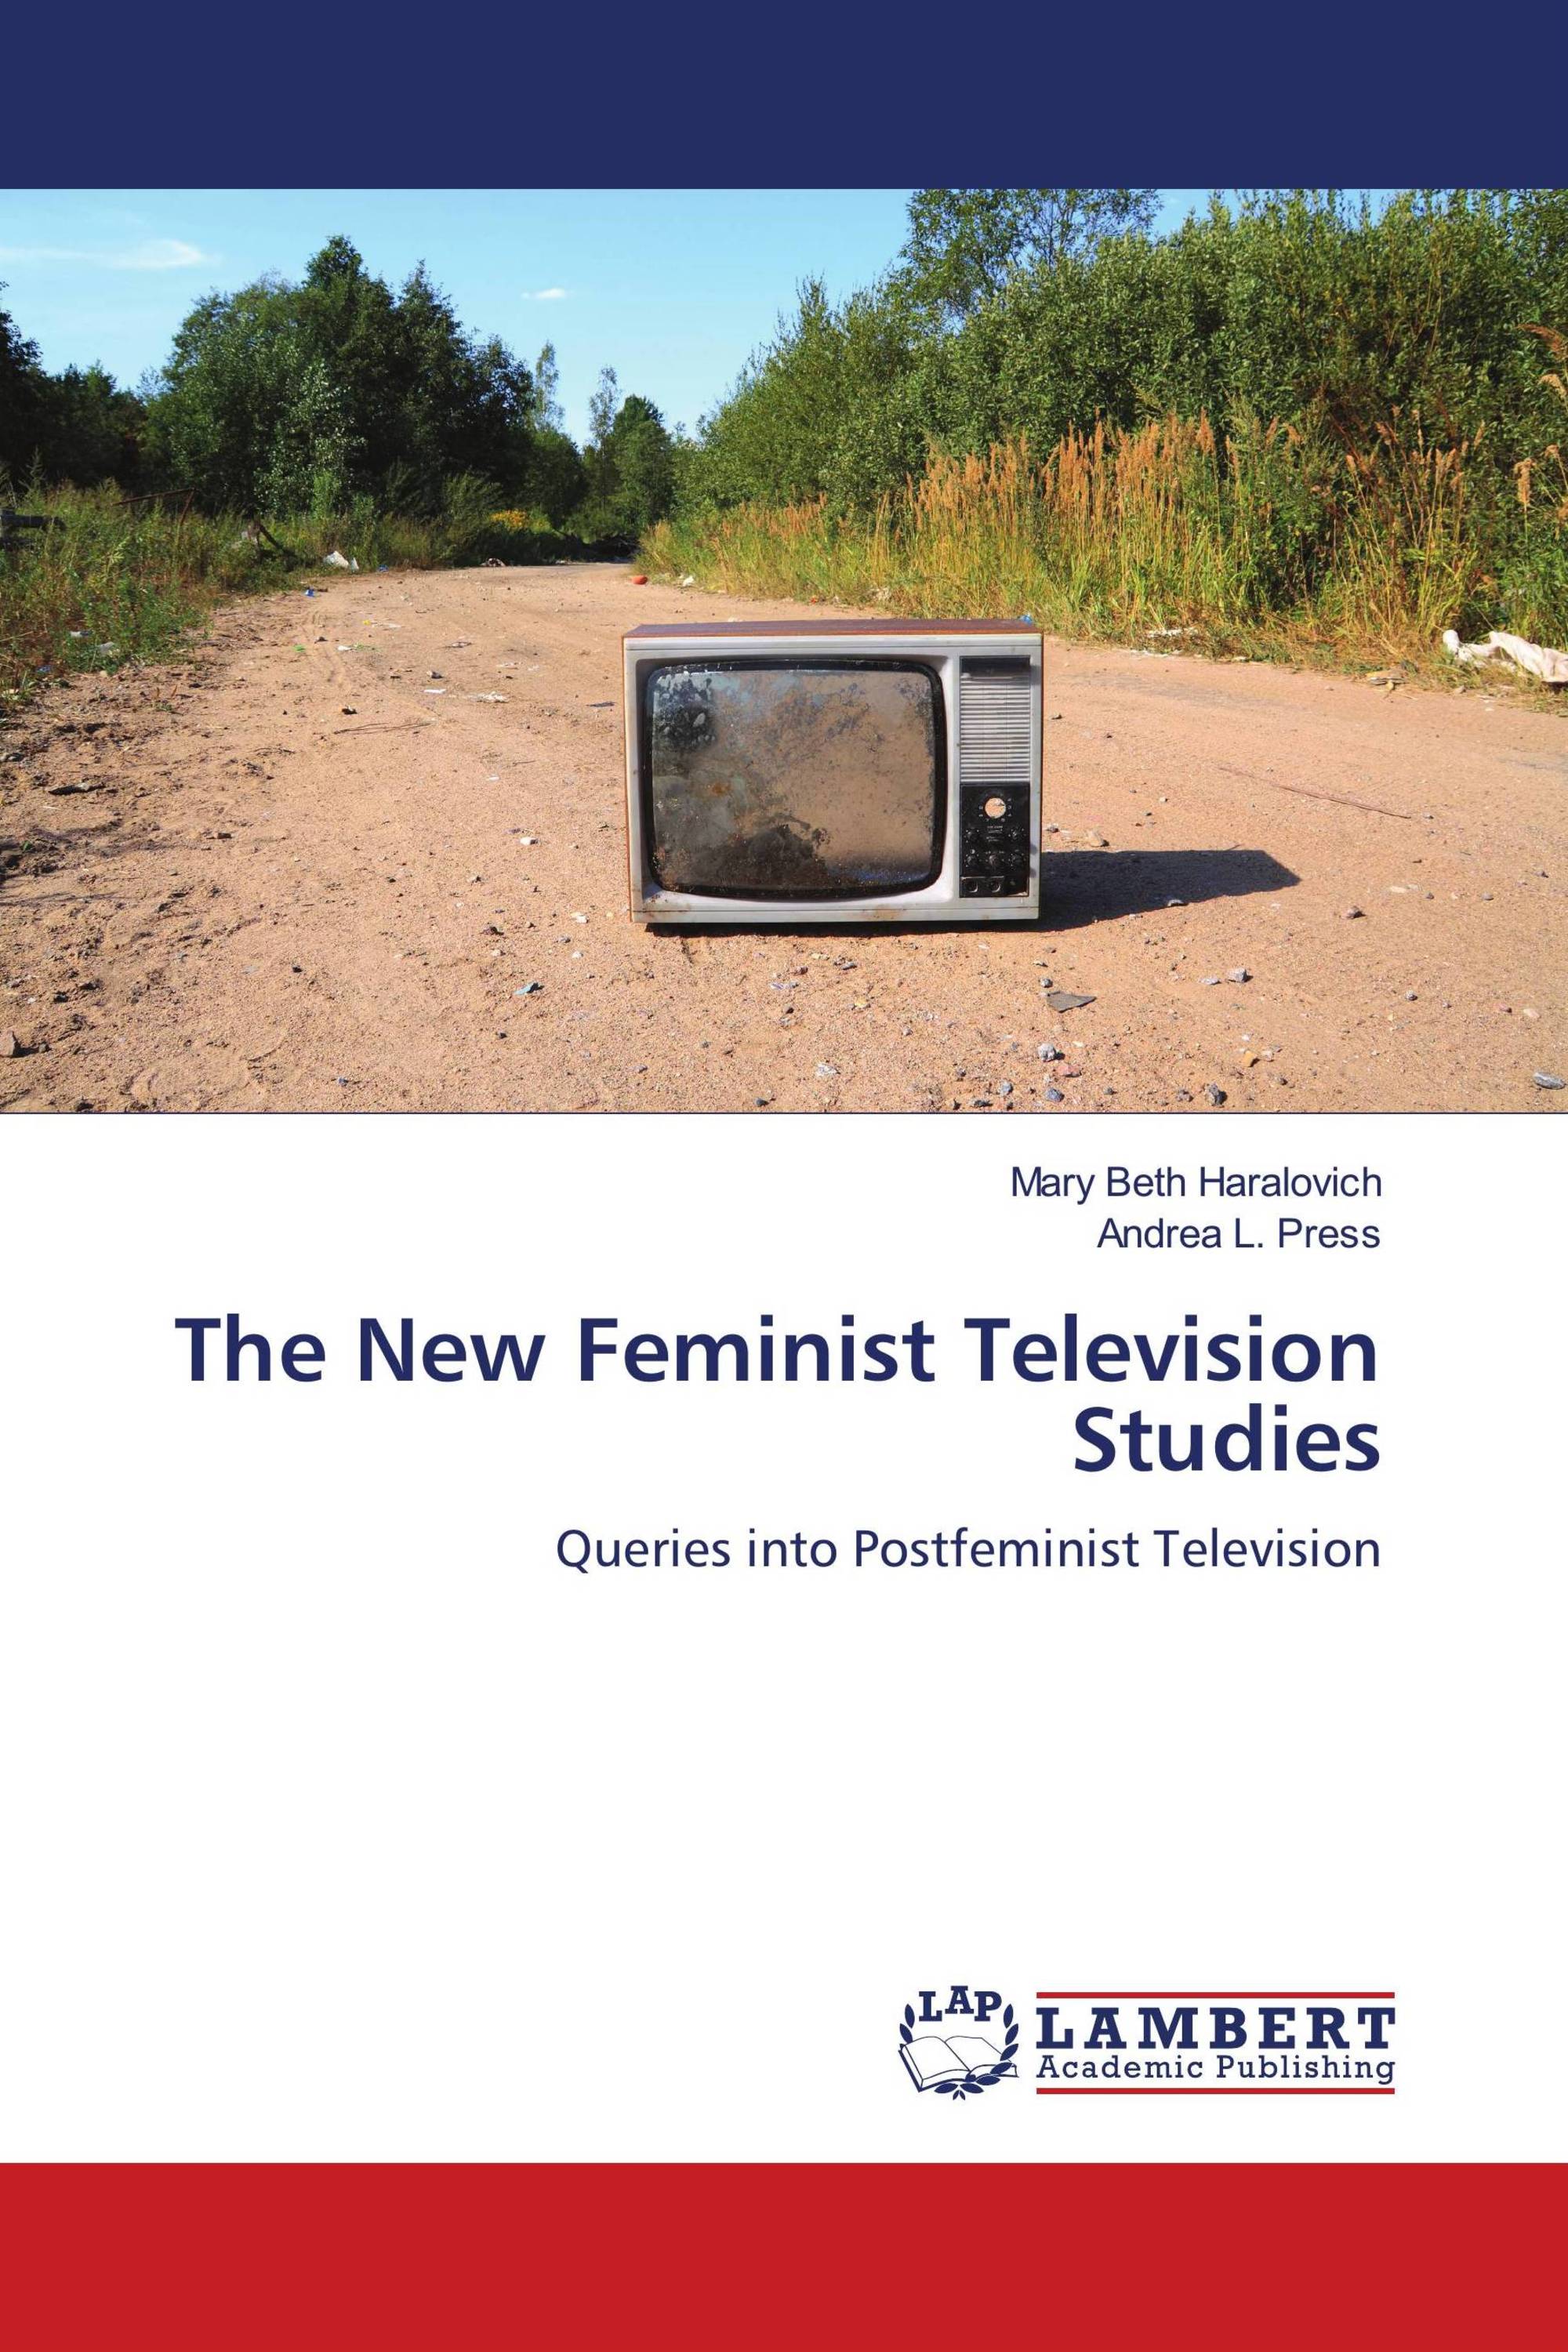 The New Feminist Television Studies